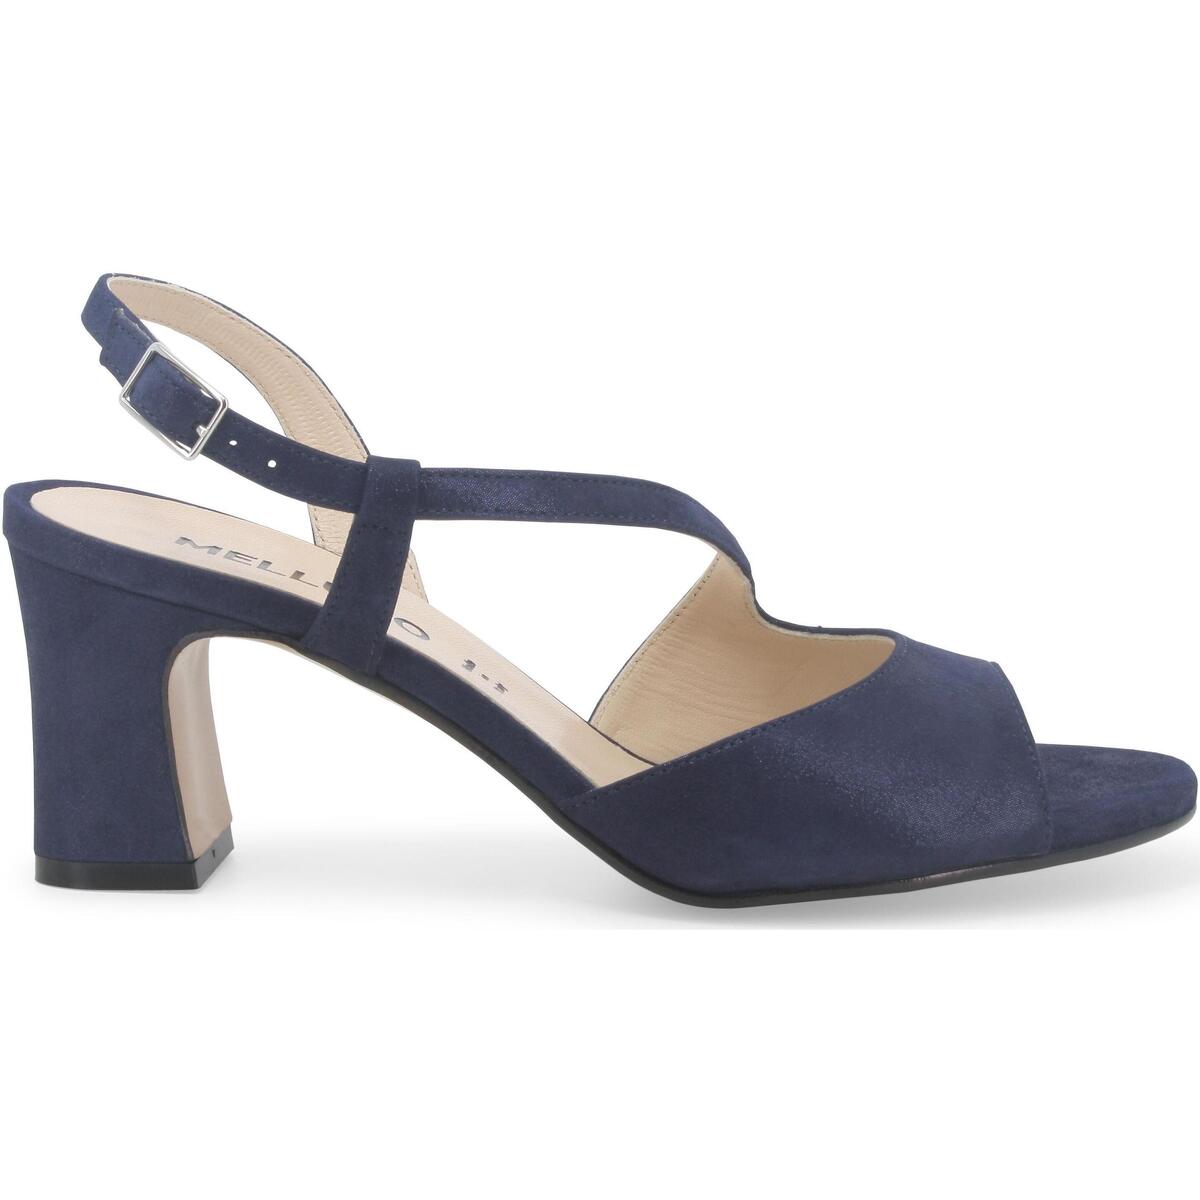 Schuhe Damen Sandalen / Sandaletten Melluso S211-235288 Blau